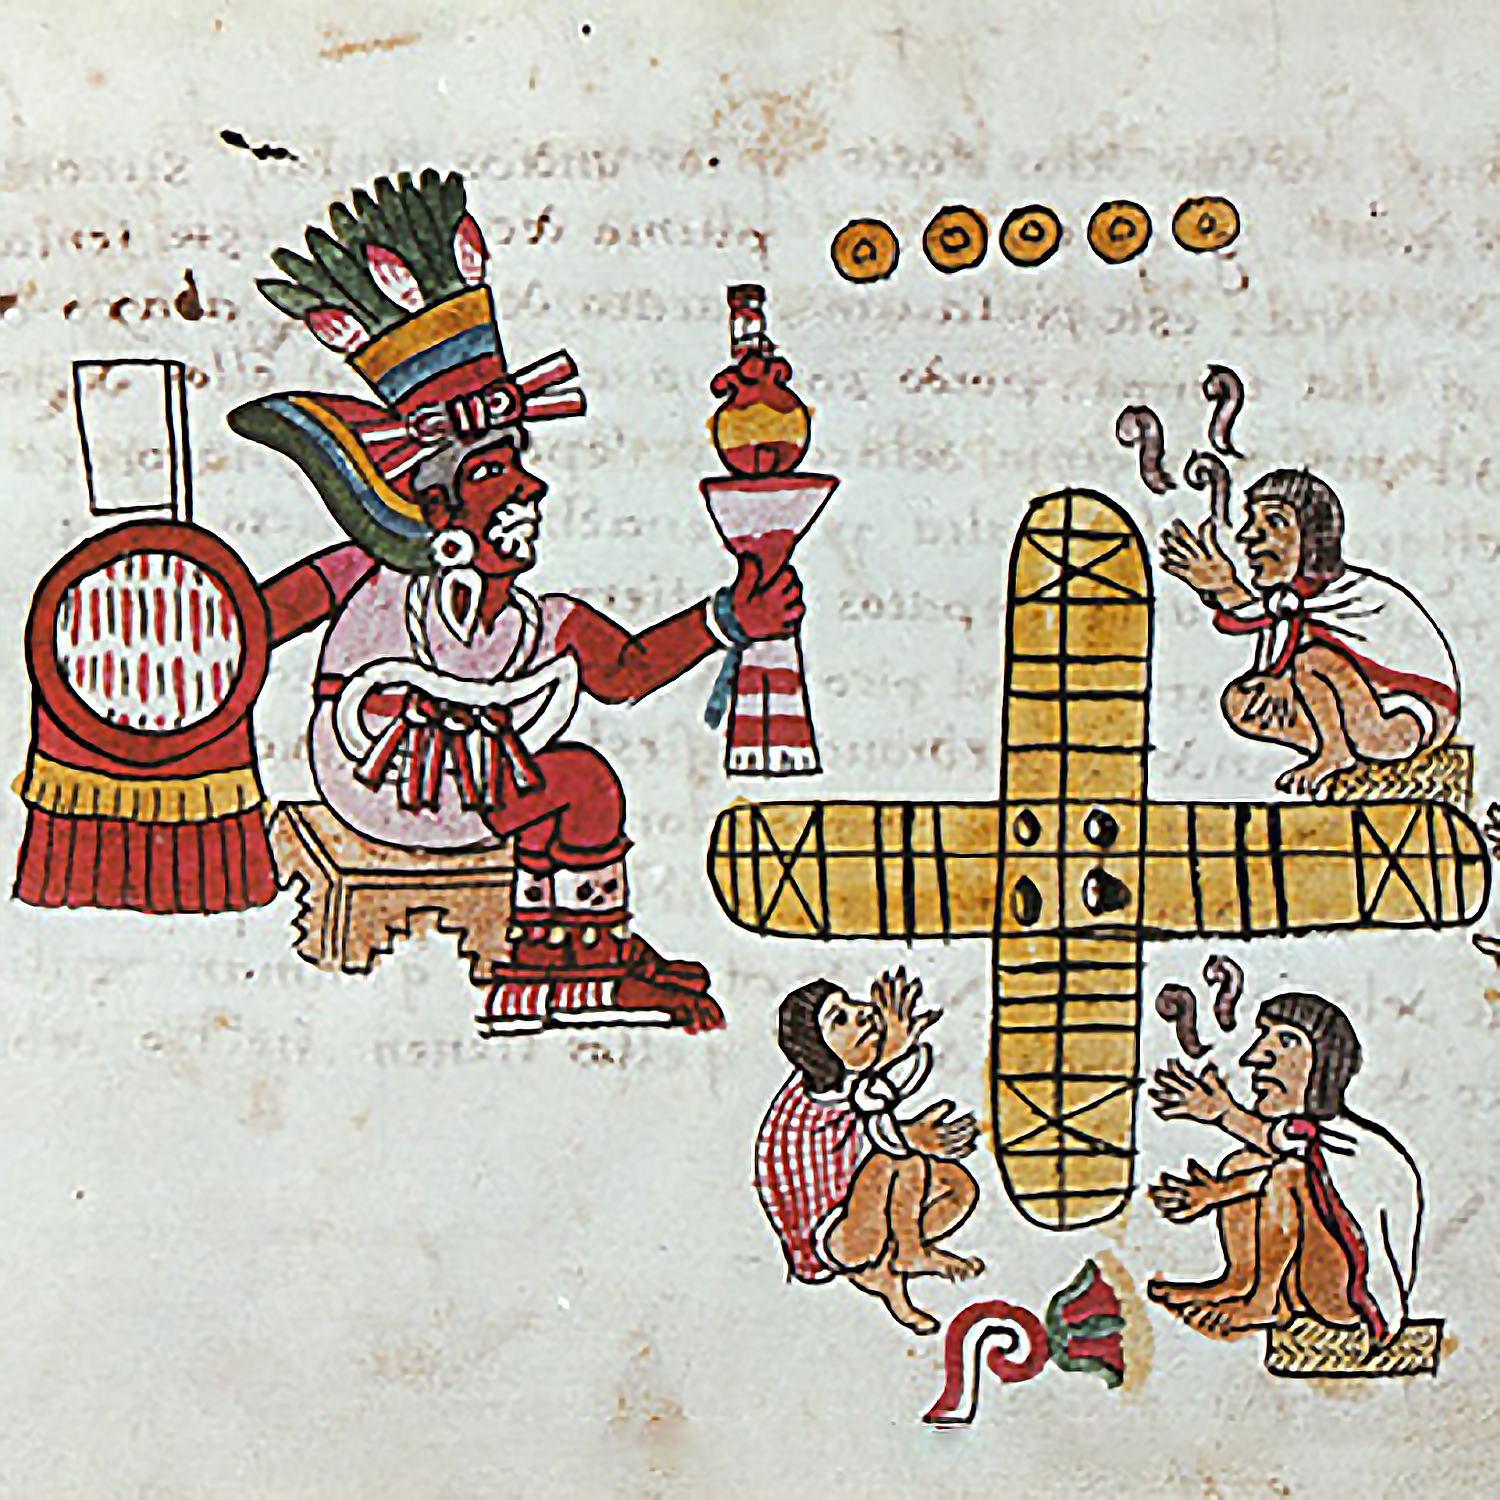 Шочипилли и игроки. Кодекс Мальябекки, Мексика, XVI в. н.э. Коллекция Biblioteca Nazionale Centrale di Firenze.